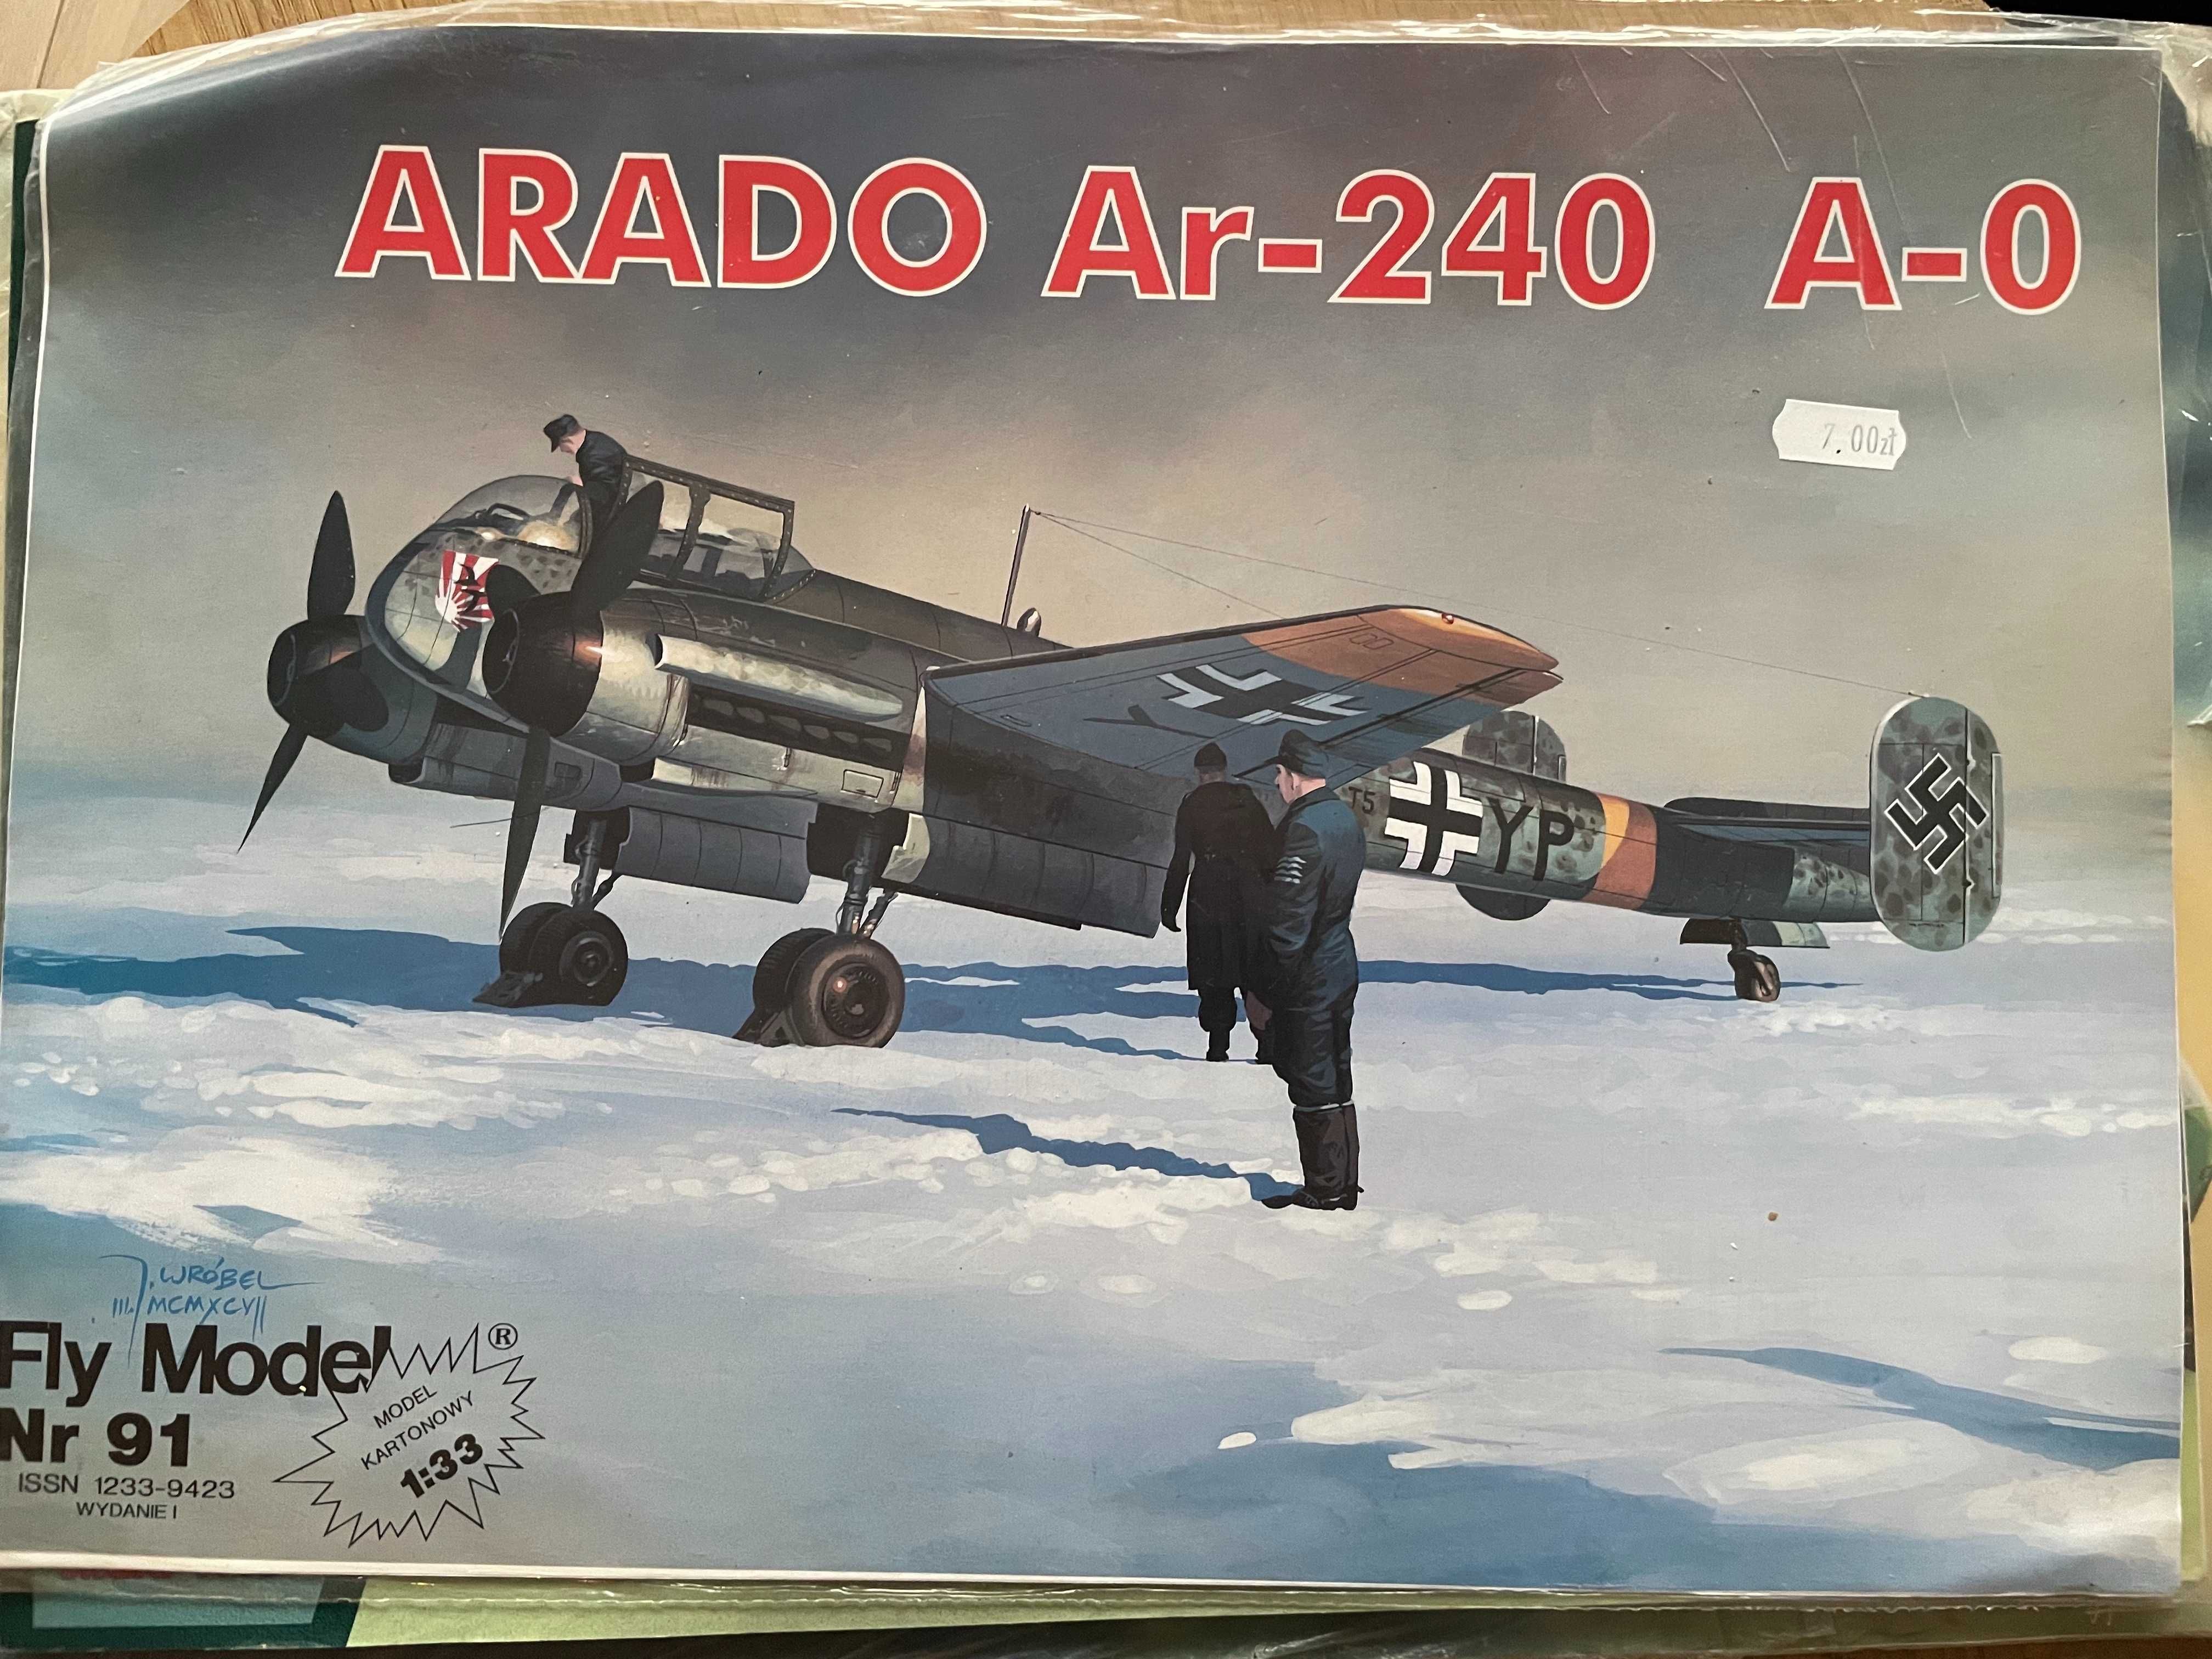 Fly Model Arado Ar-240 A-0